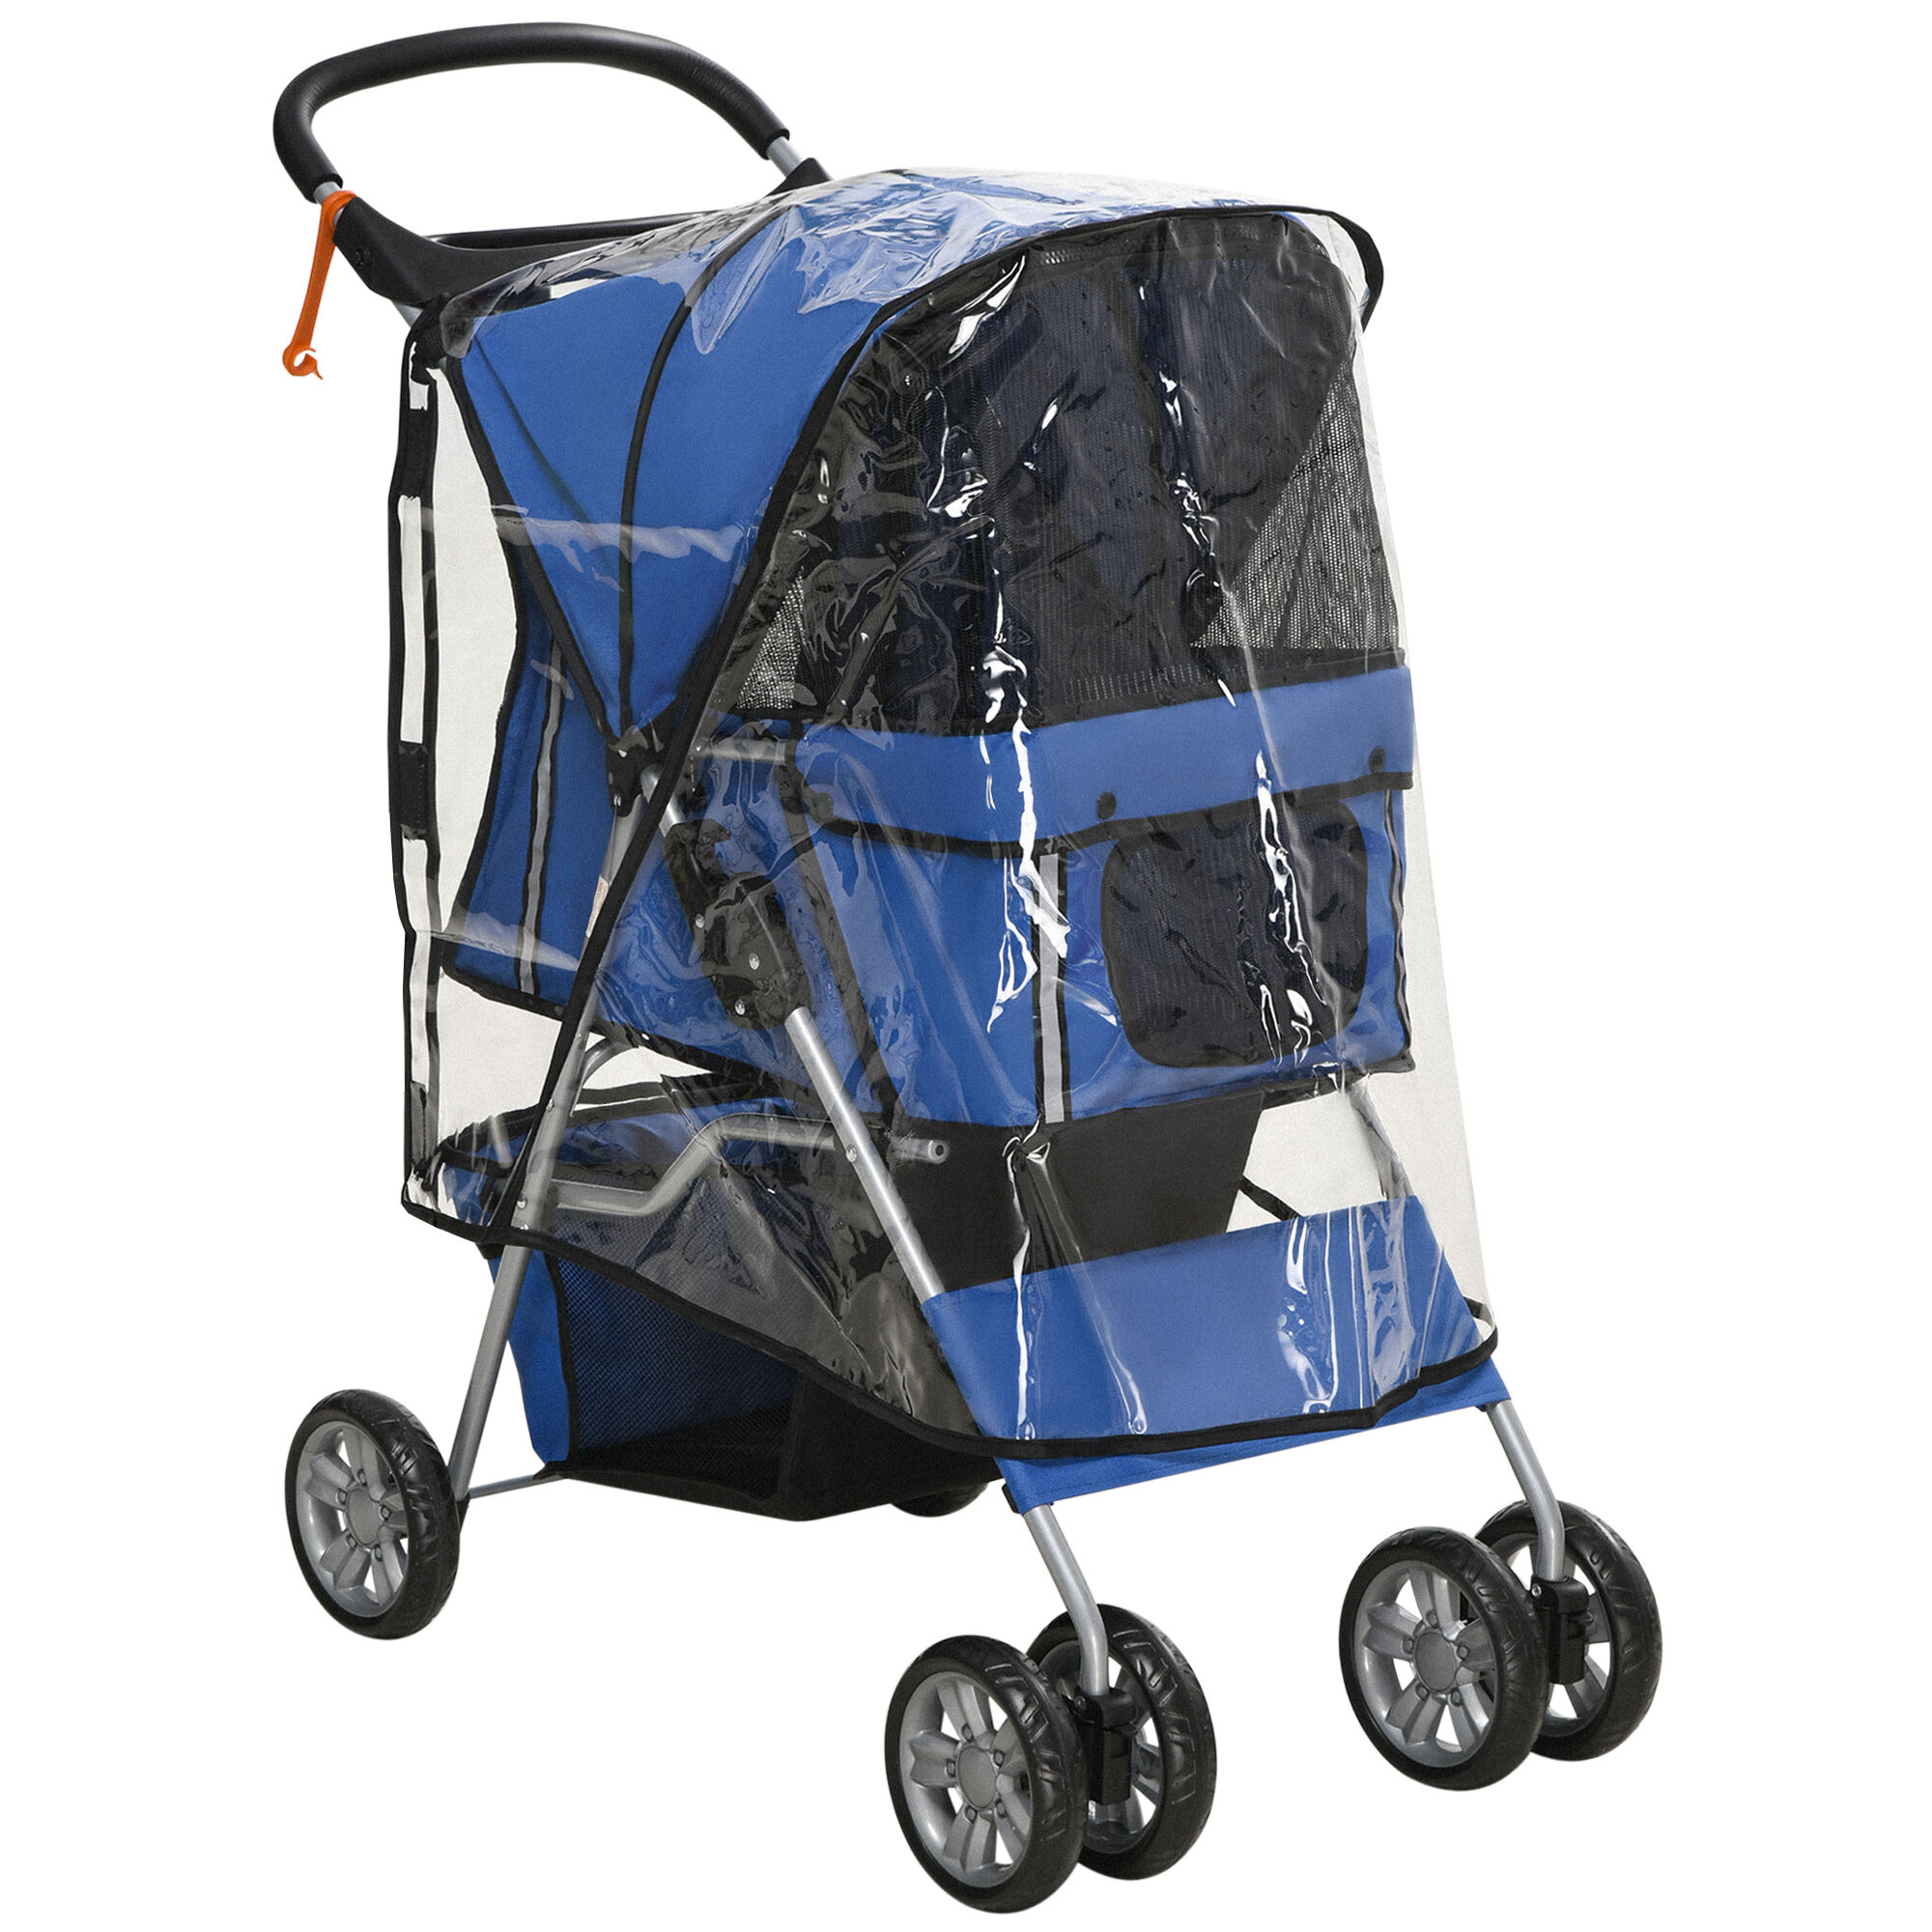 PawHut Small Dog Stroller, Lightweight, Folding, Rain Protection, Drink Holder, Basket, Safety Reflectors, Blue